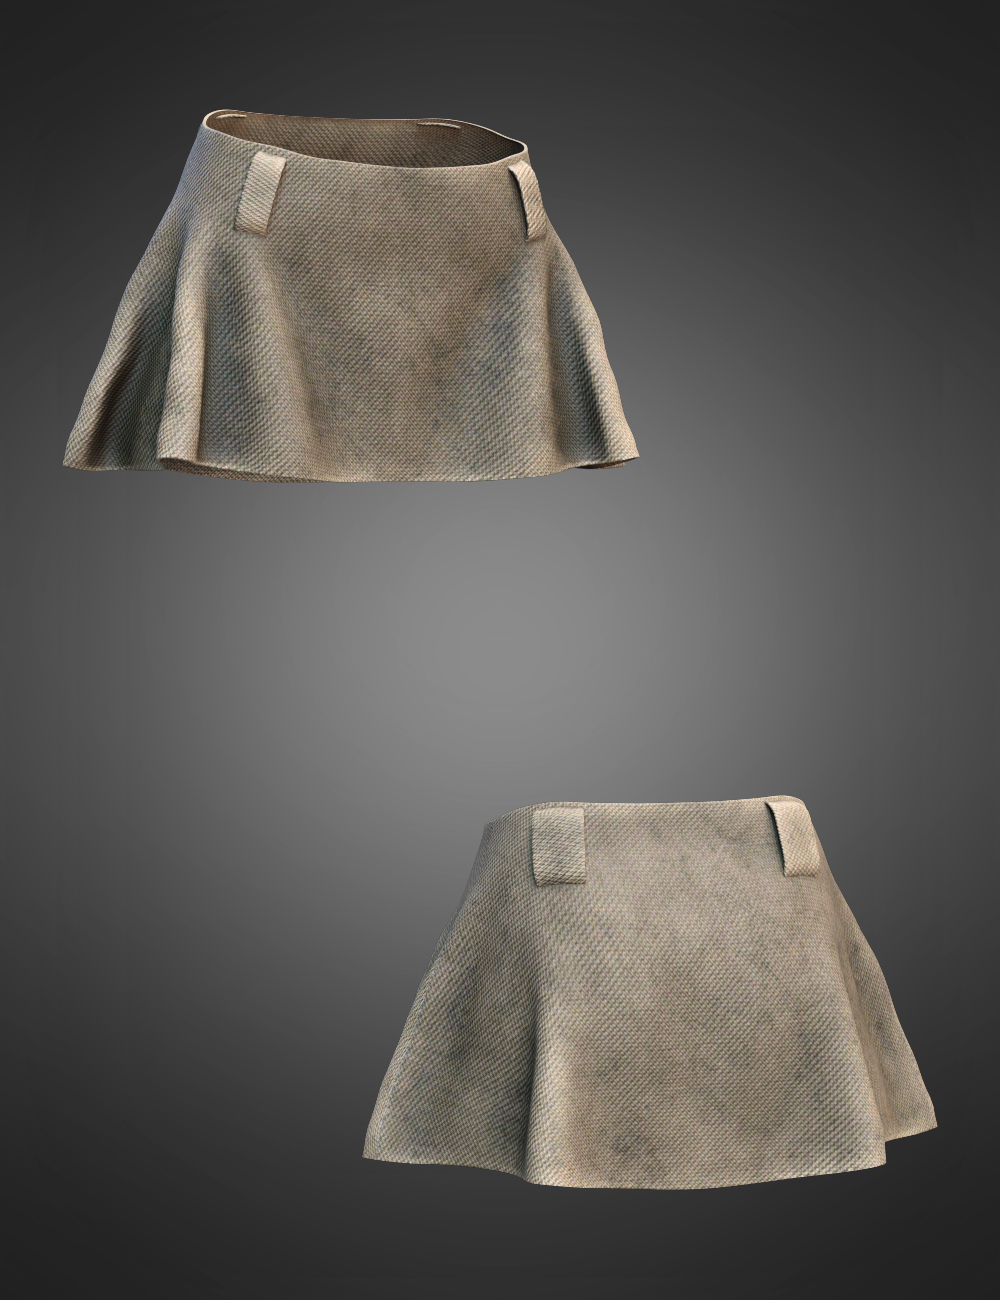 Urban Battle Skirt for Genesis 8.1 Females by: Yura, 3D Models by Daz 3D